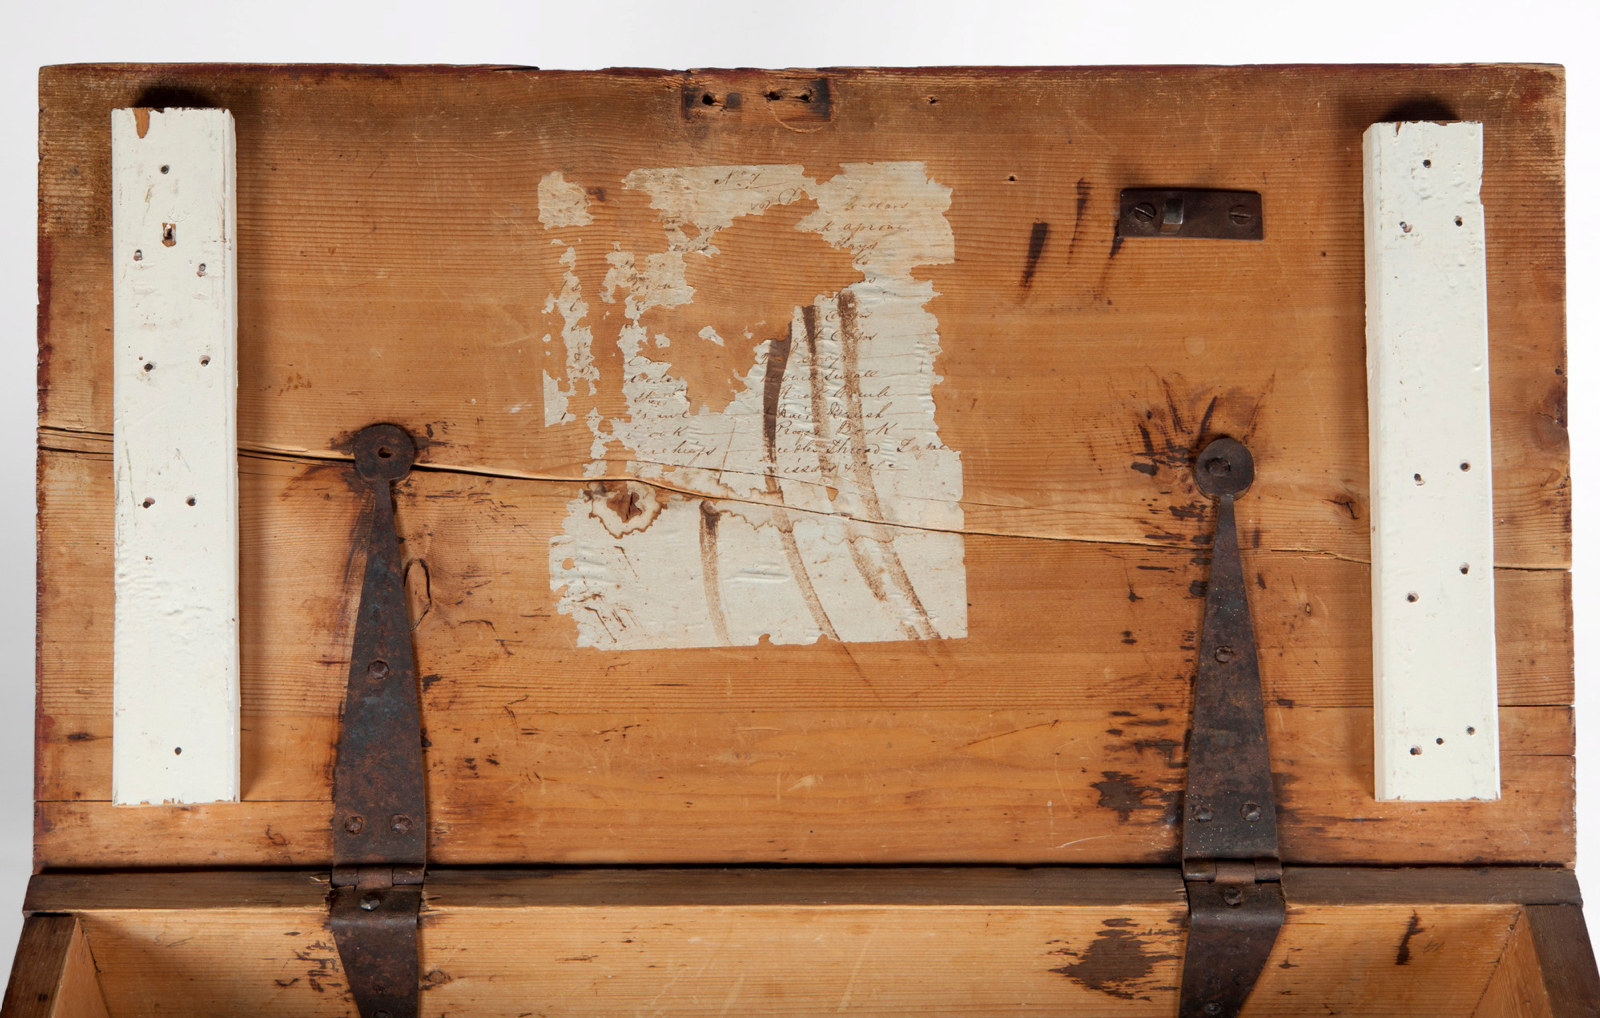 Inside of wooden box belonging to Margaret Hurley